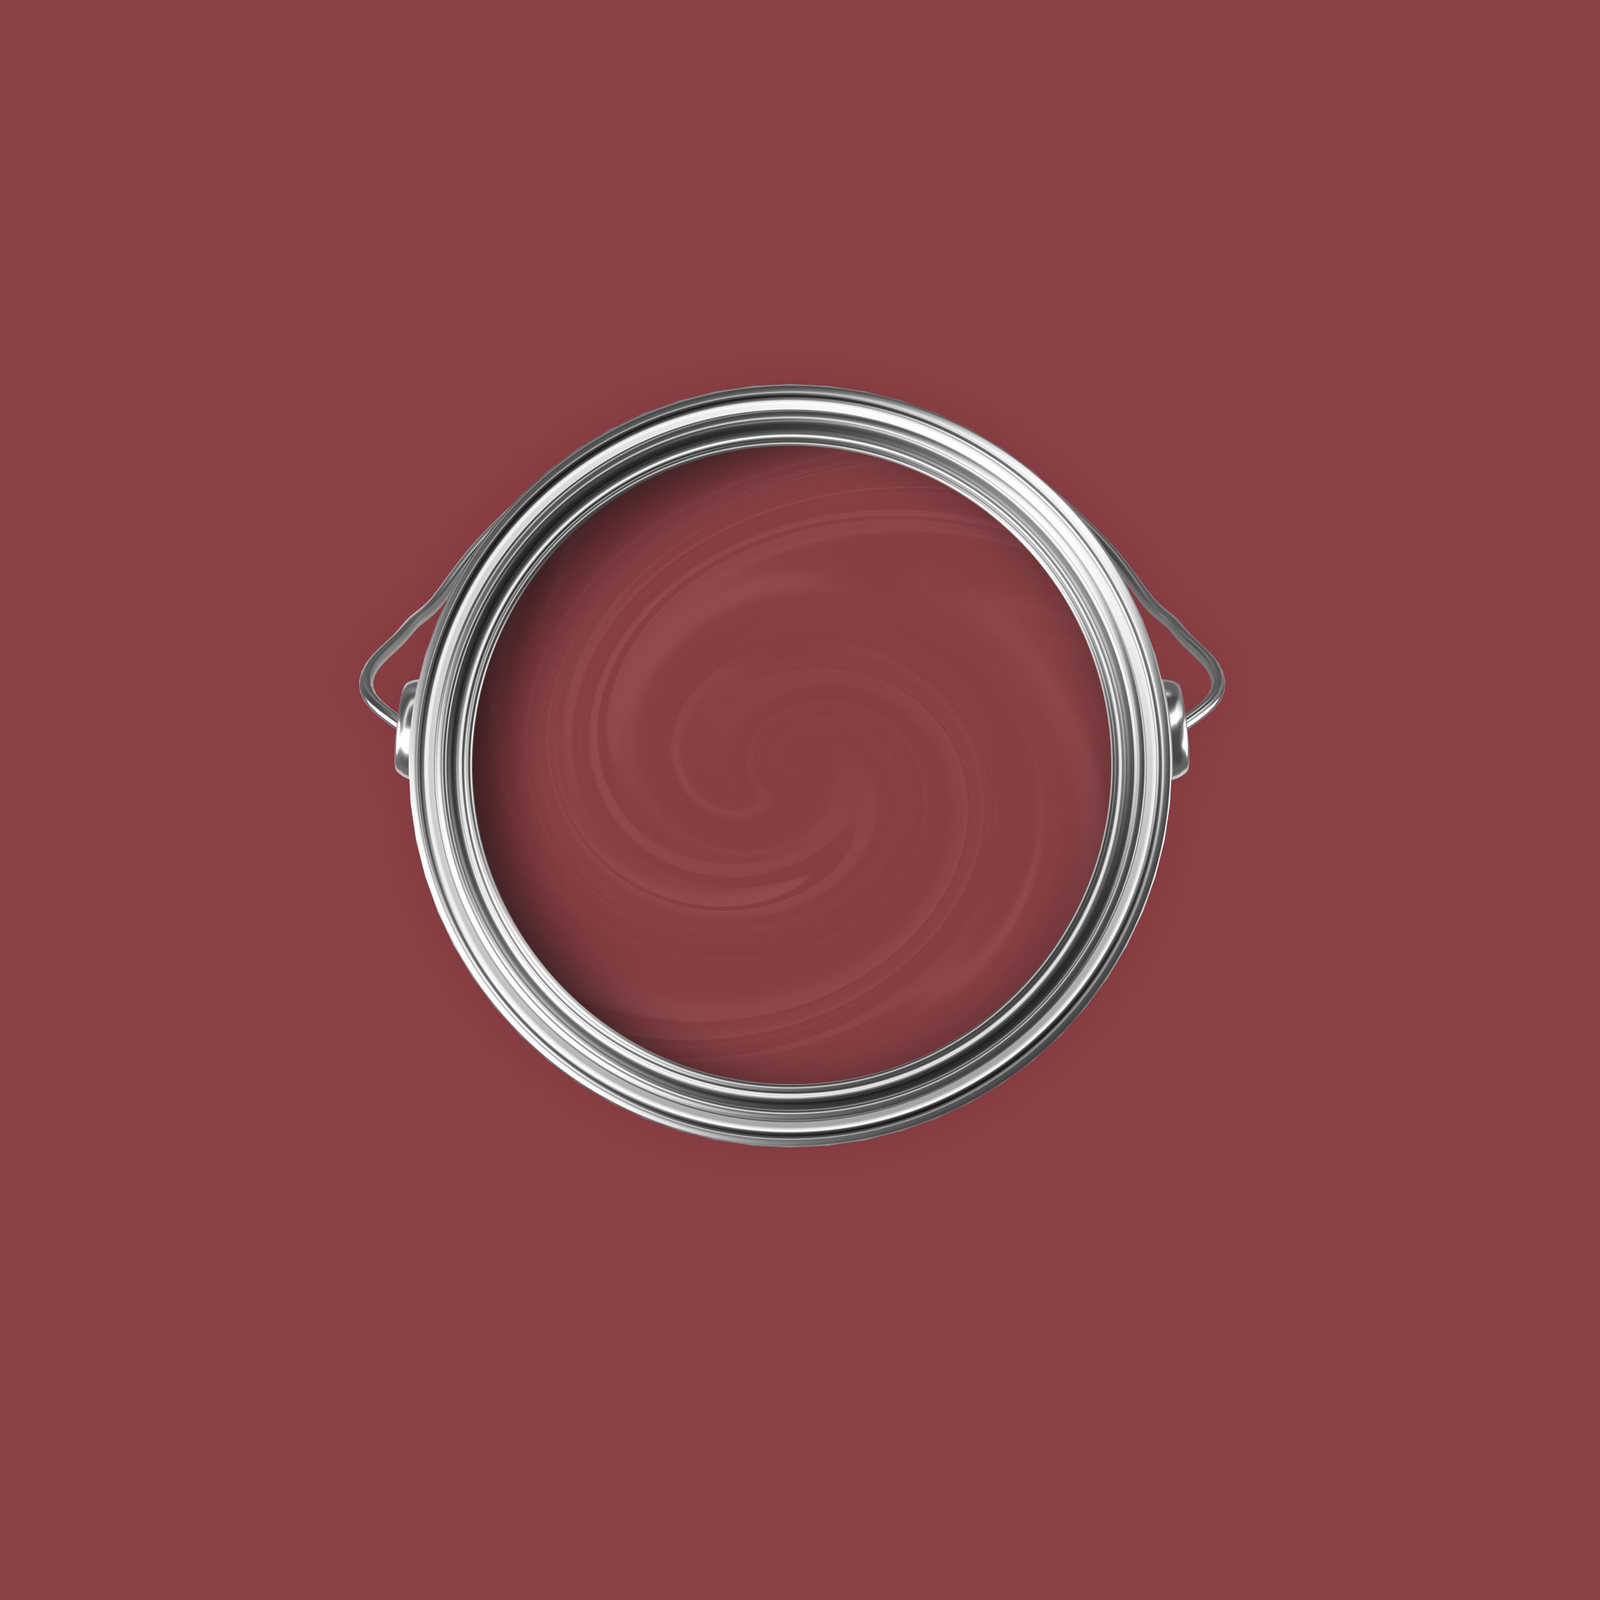             Premium Wall Paint warm cherry red »Luxury Lipstick« NW1006 – 2.5 litre
        